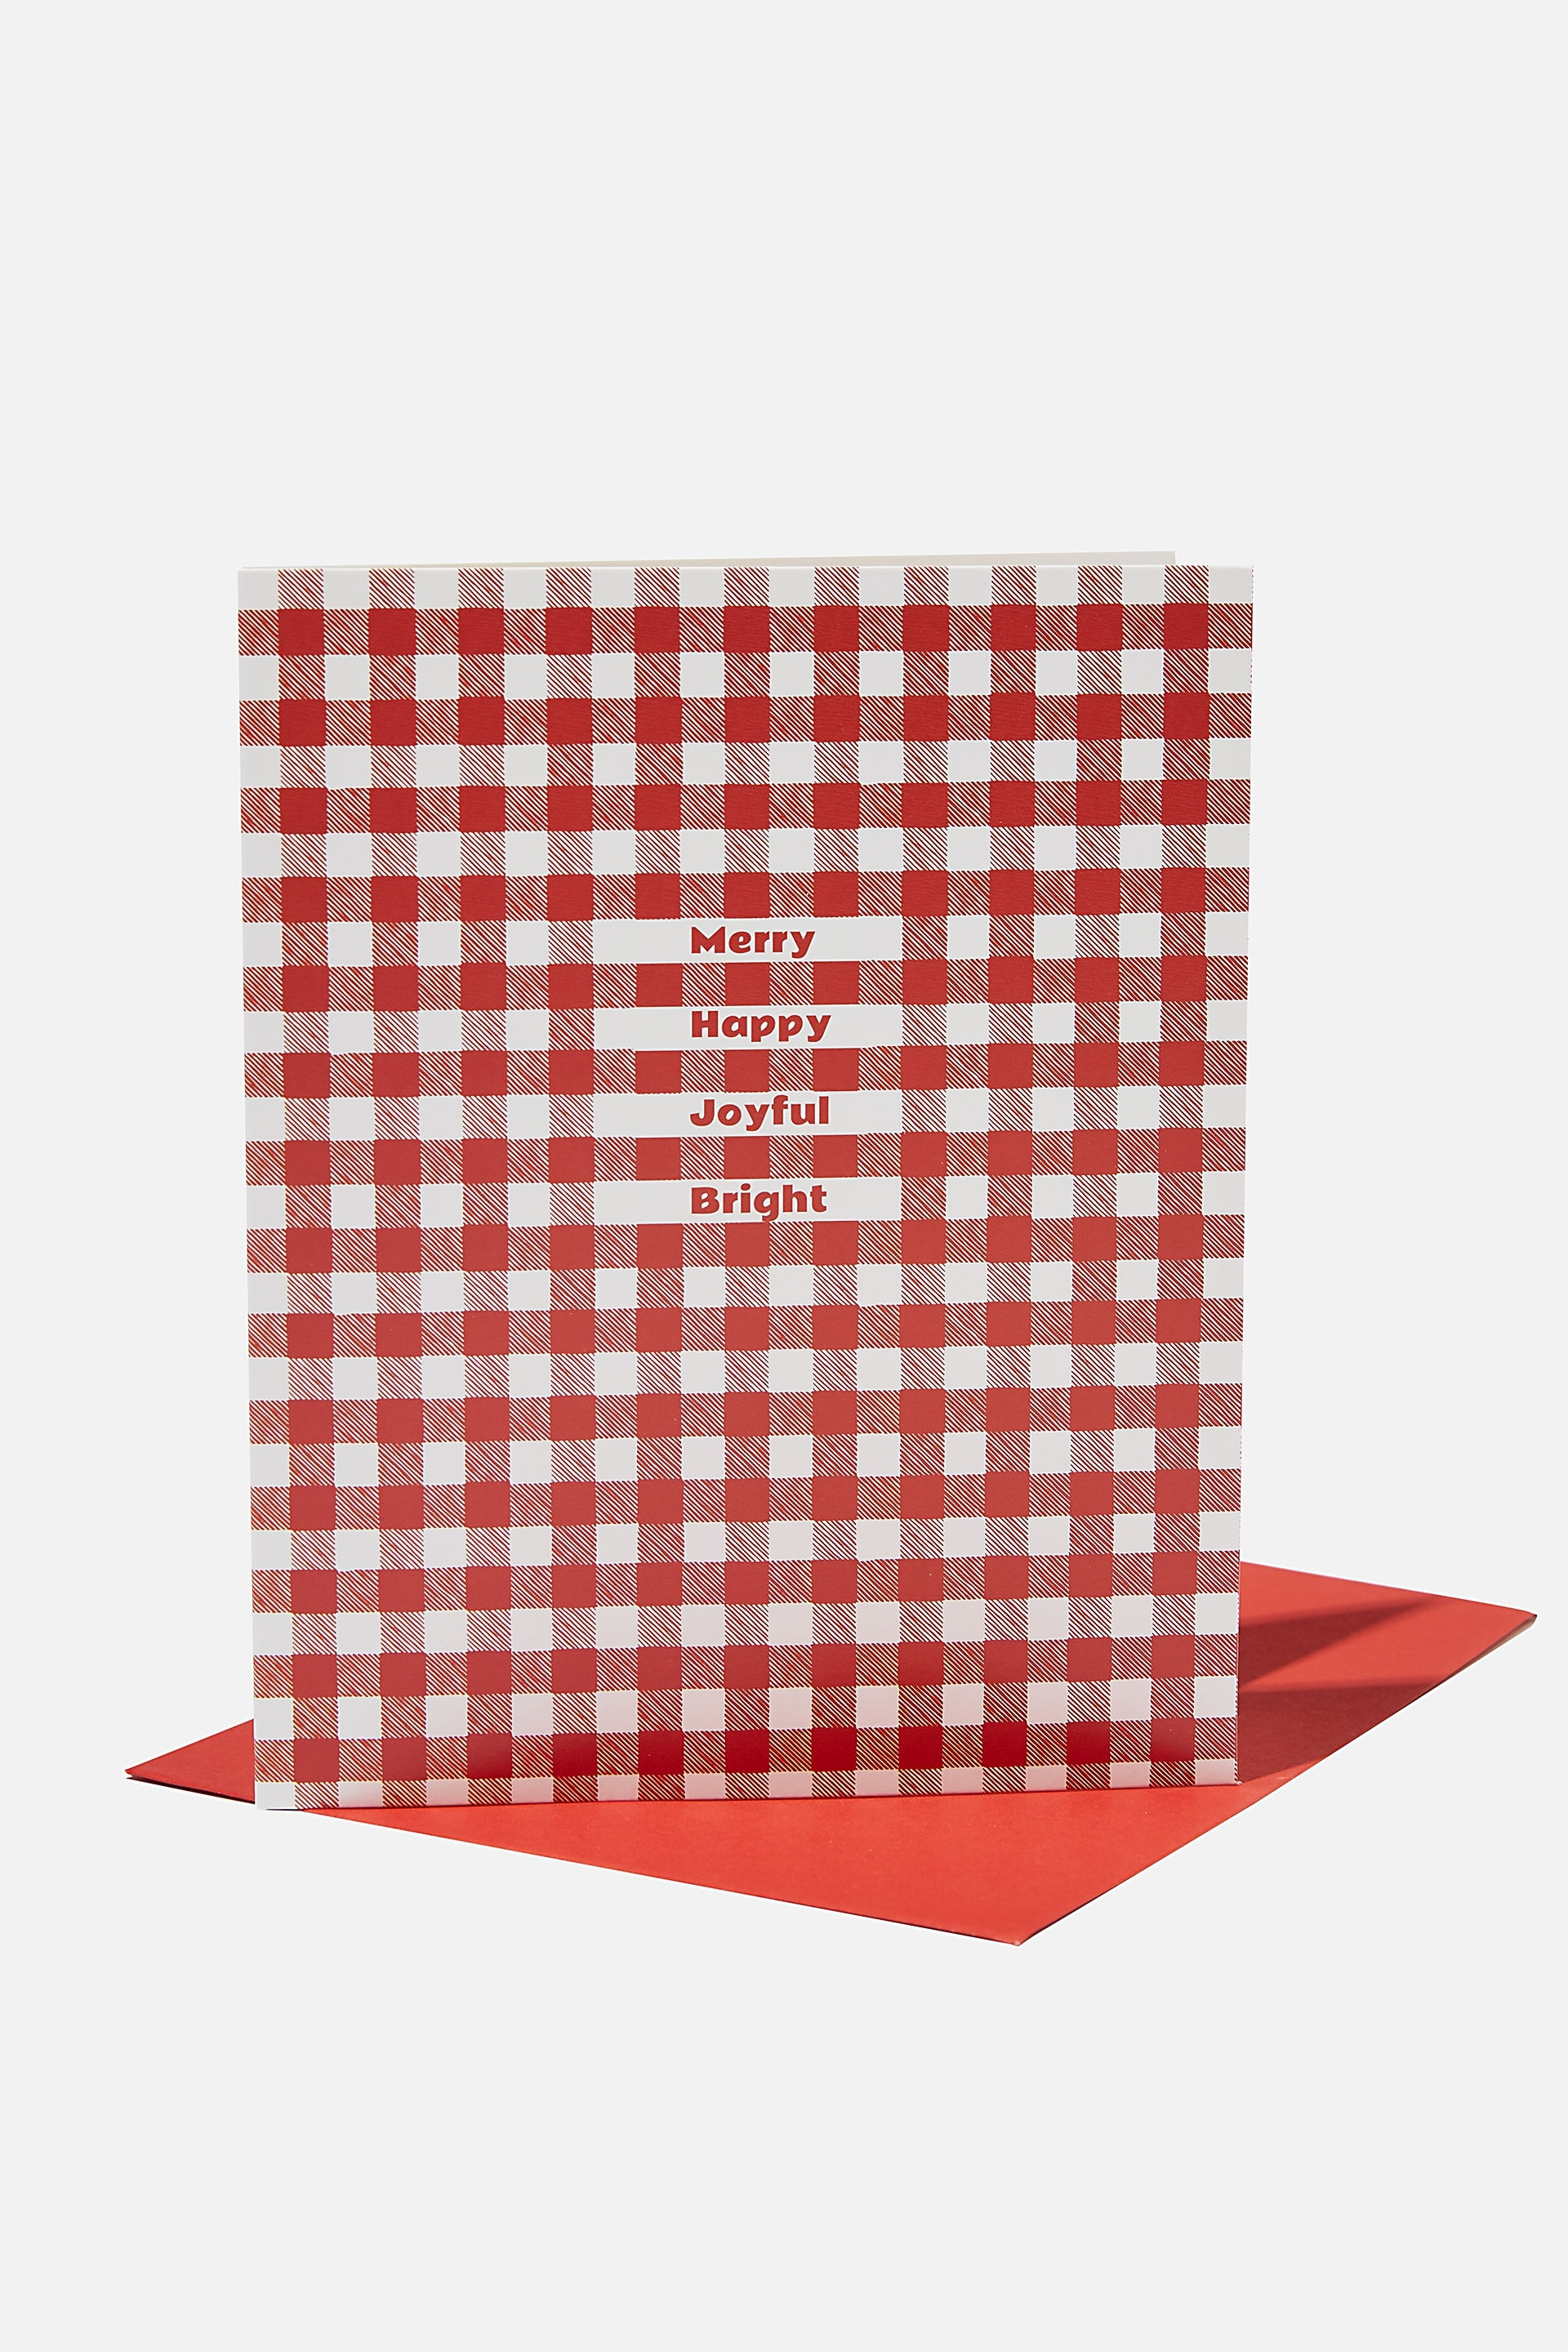 Typo - Christmas Card 2021 - Red gingham joyful bright